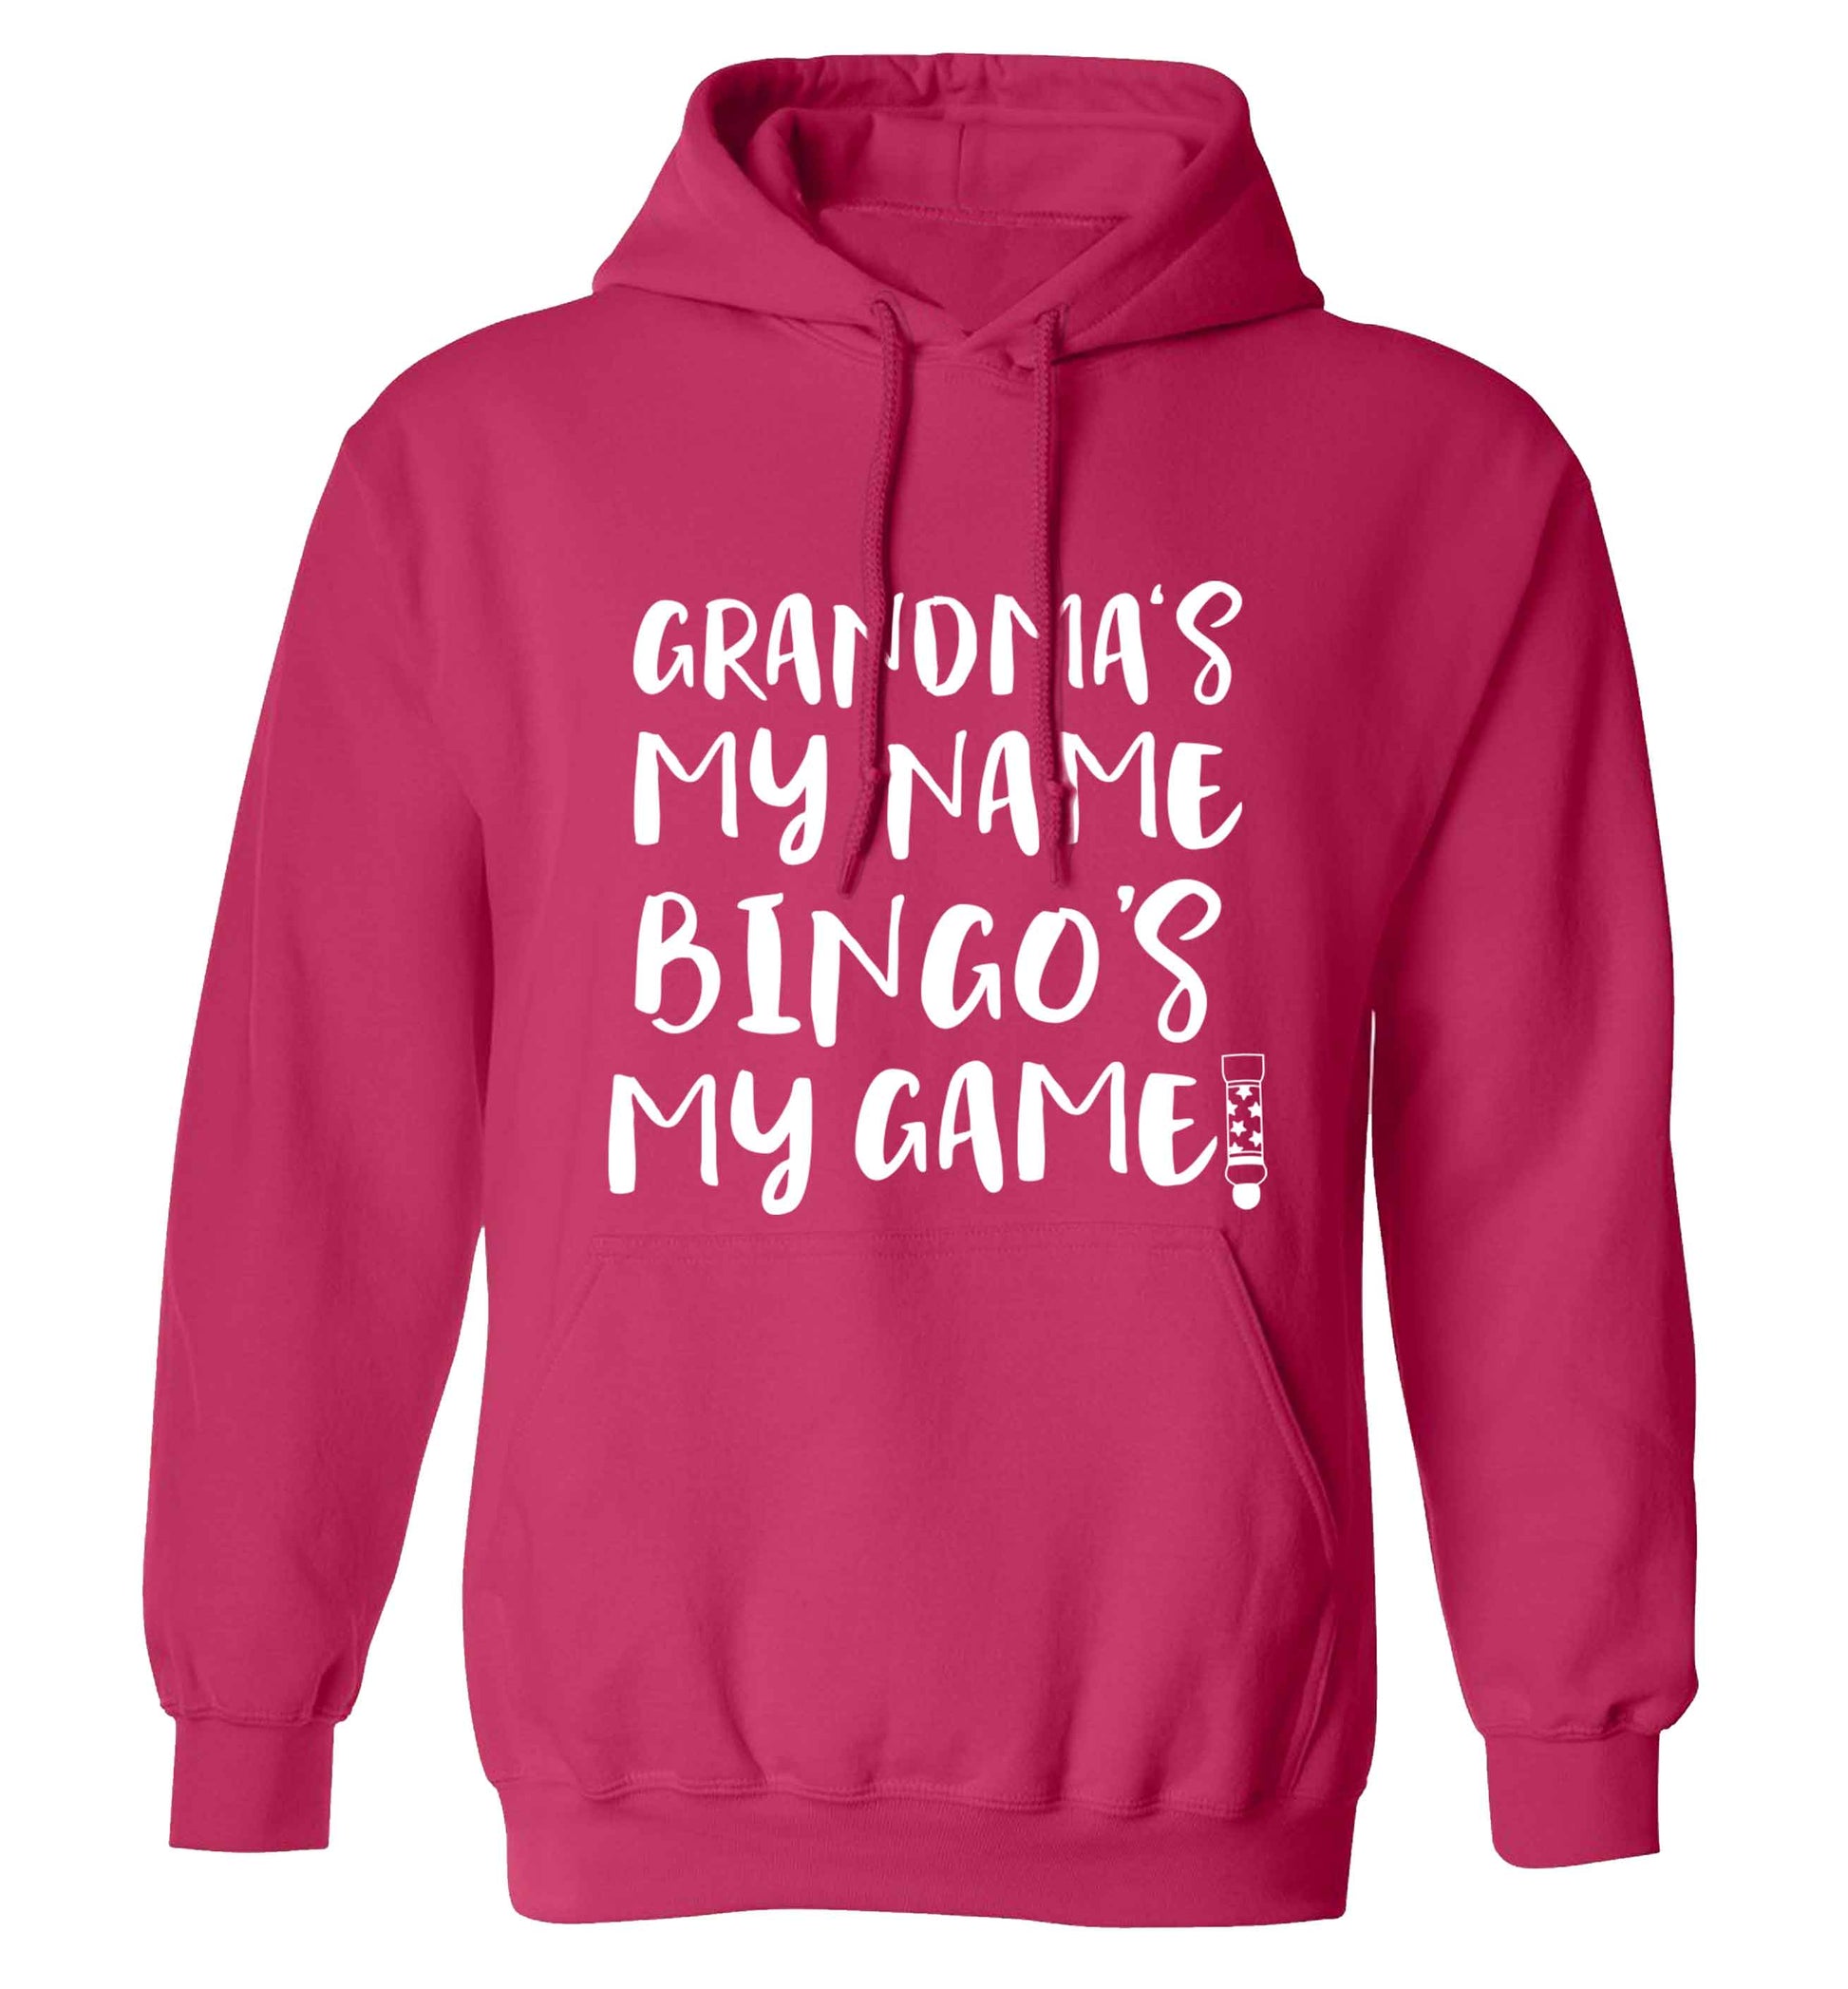 Grandma's my name bingo's my game! adults unisex pink hoodie 2XL